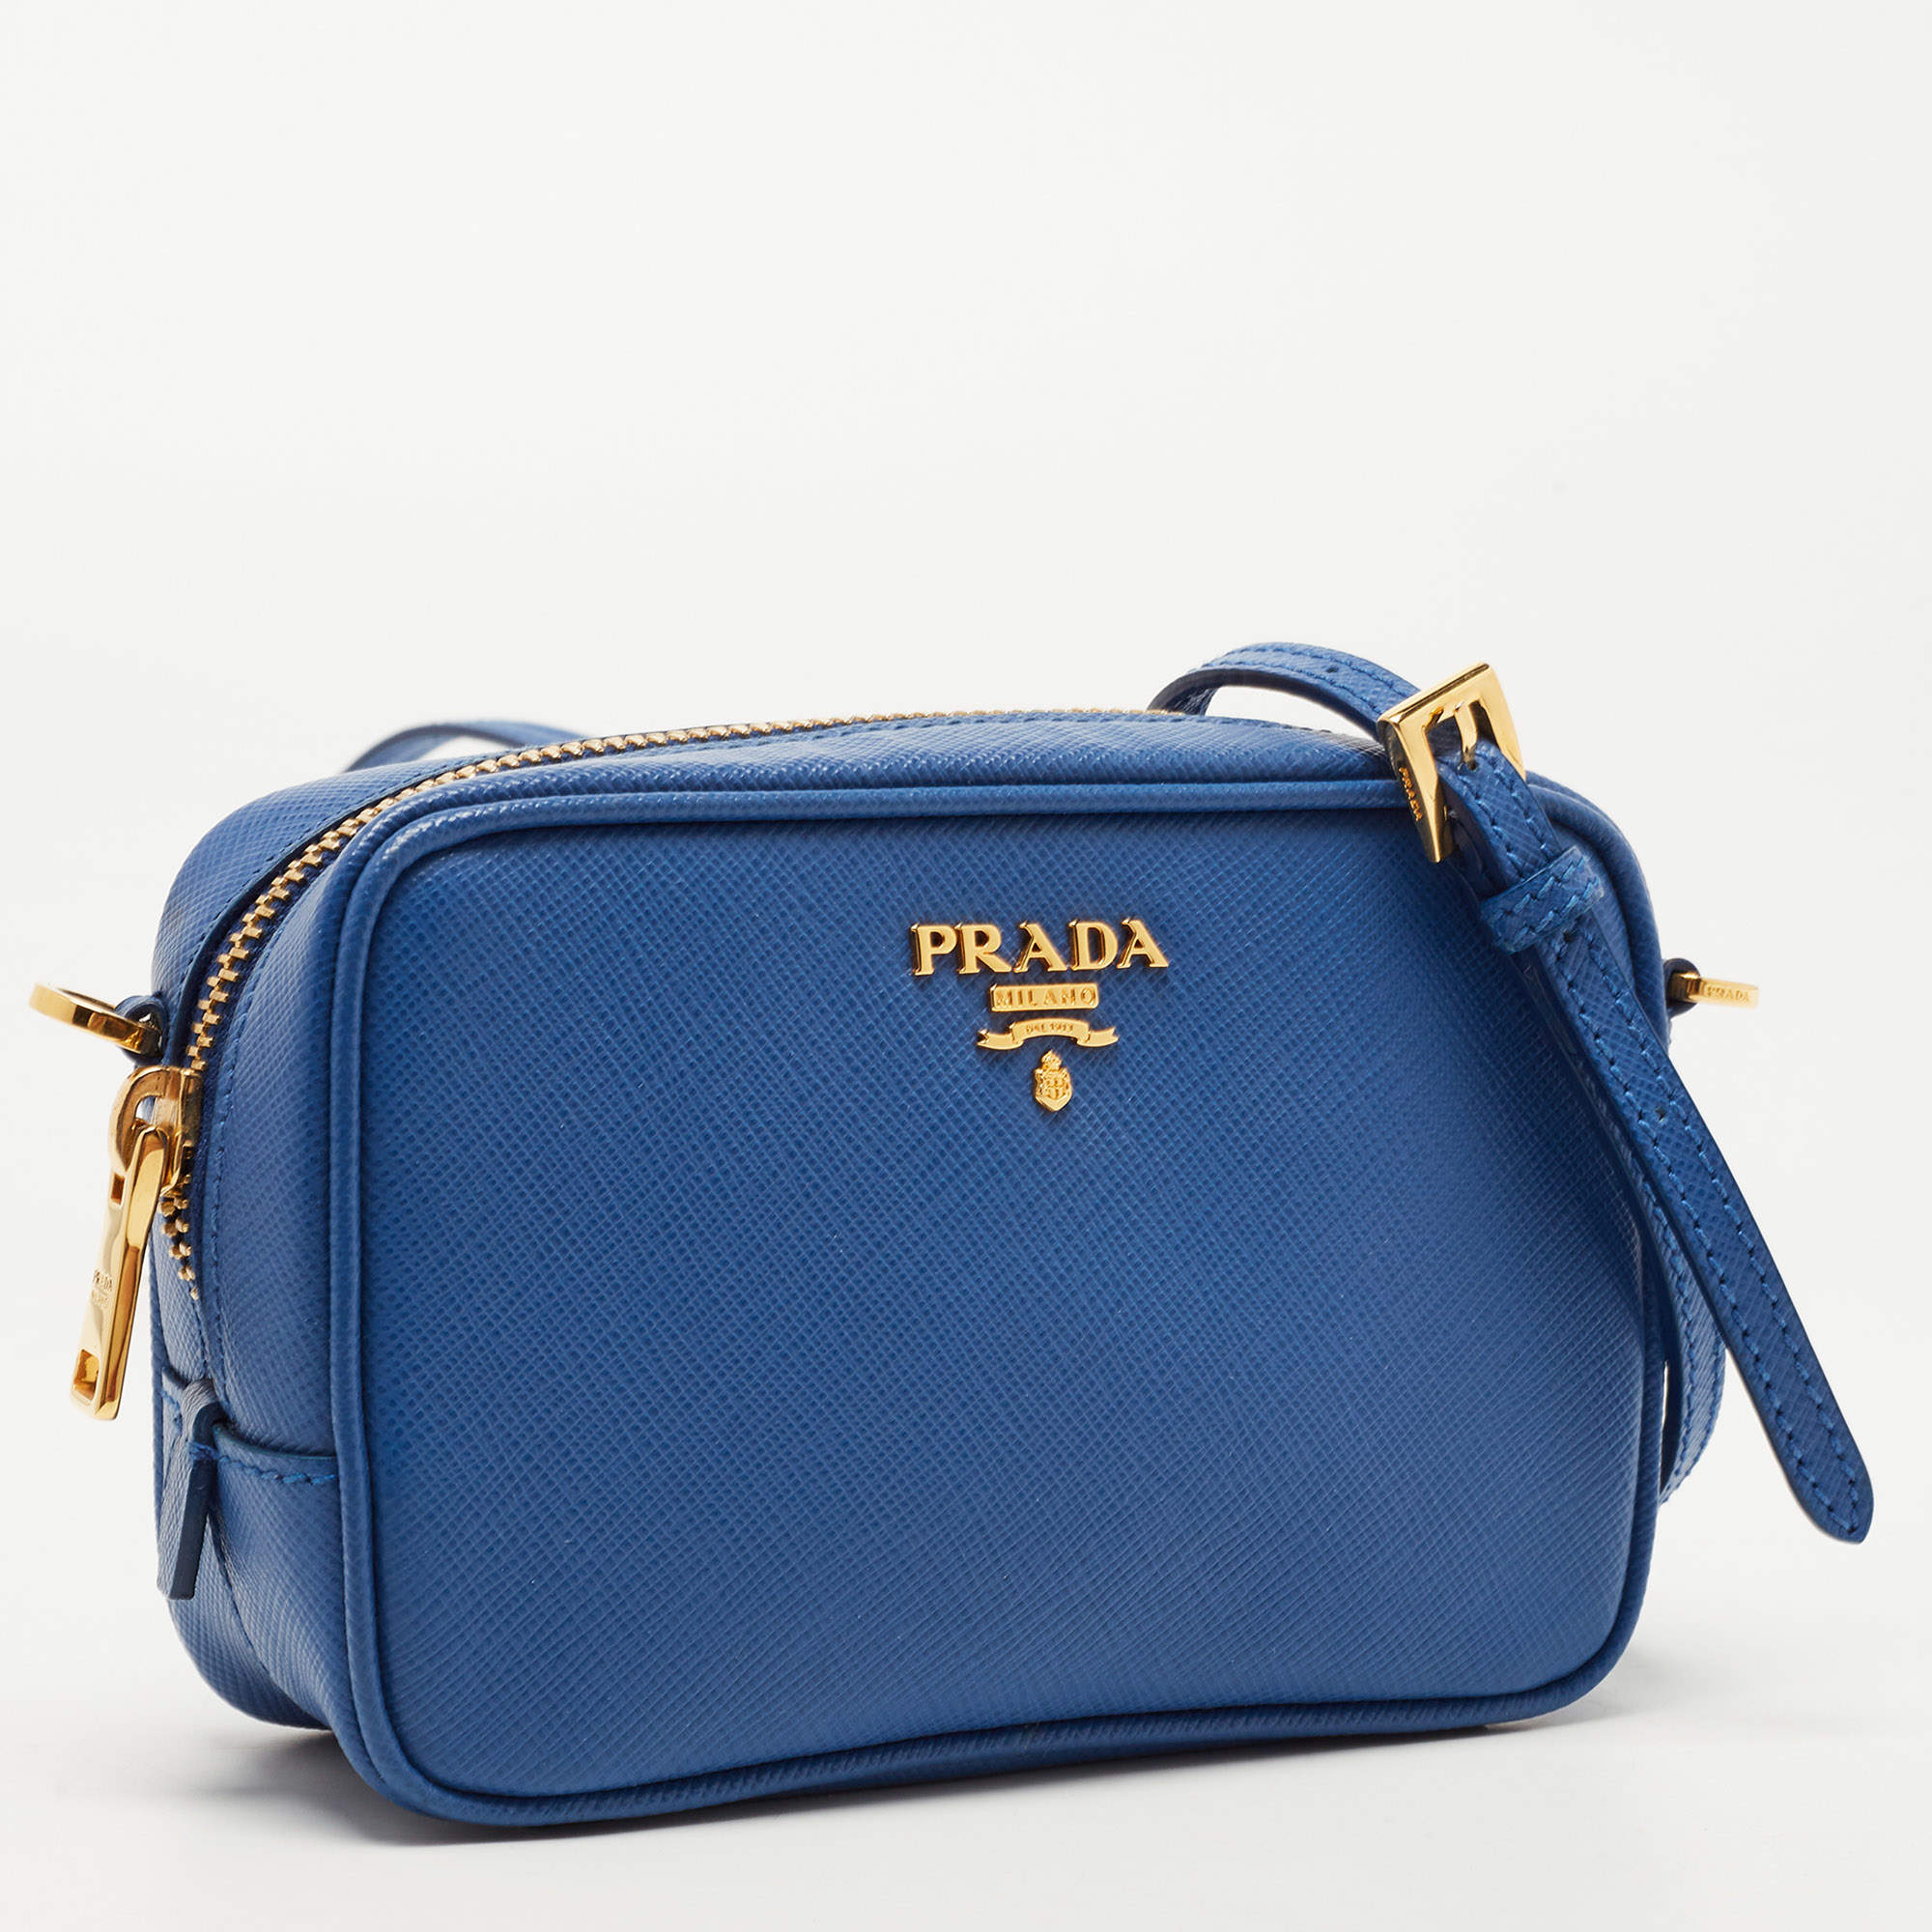 Prada Blue Sling Bag View3  Bags, Prada handbags, Cross body sling bag